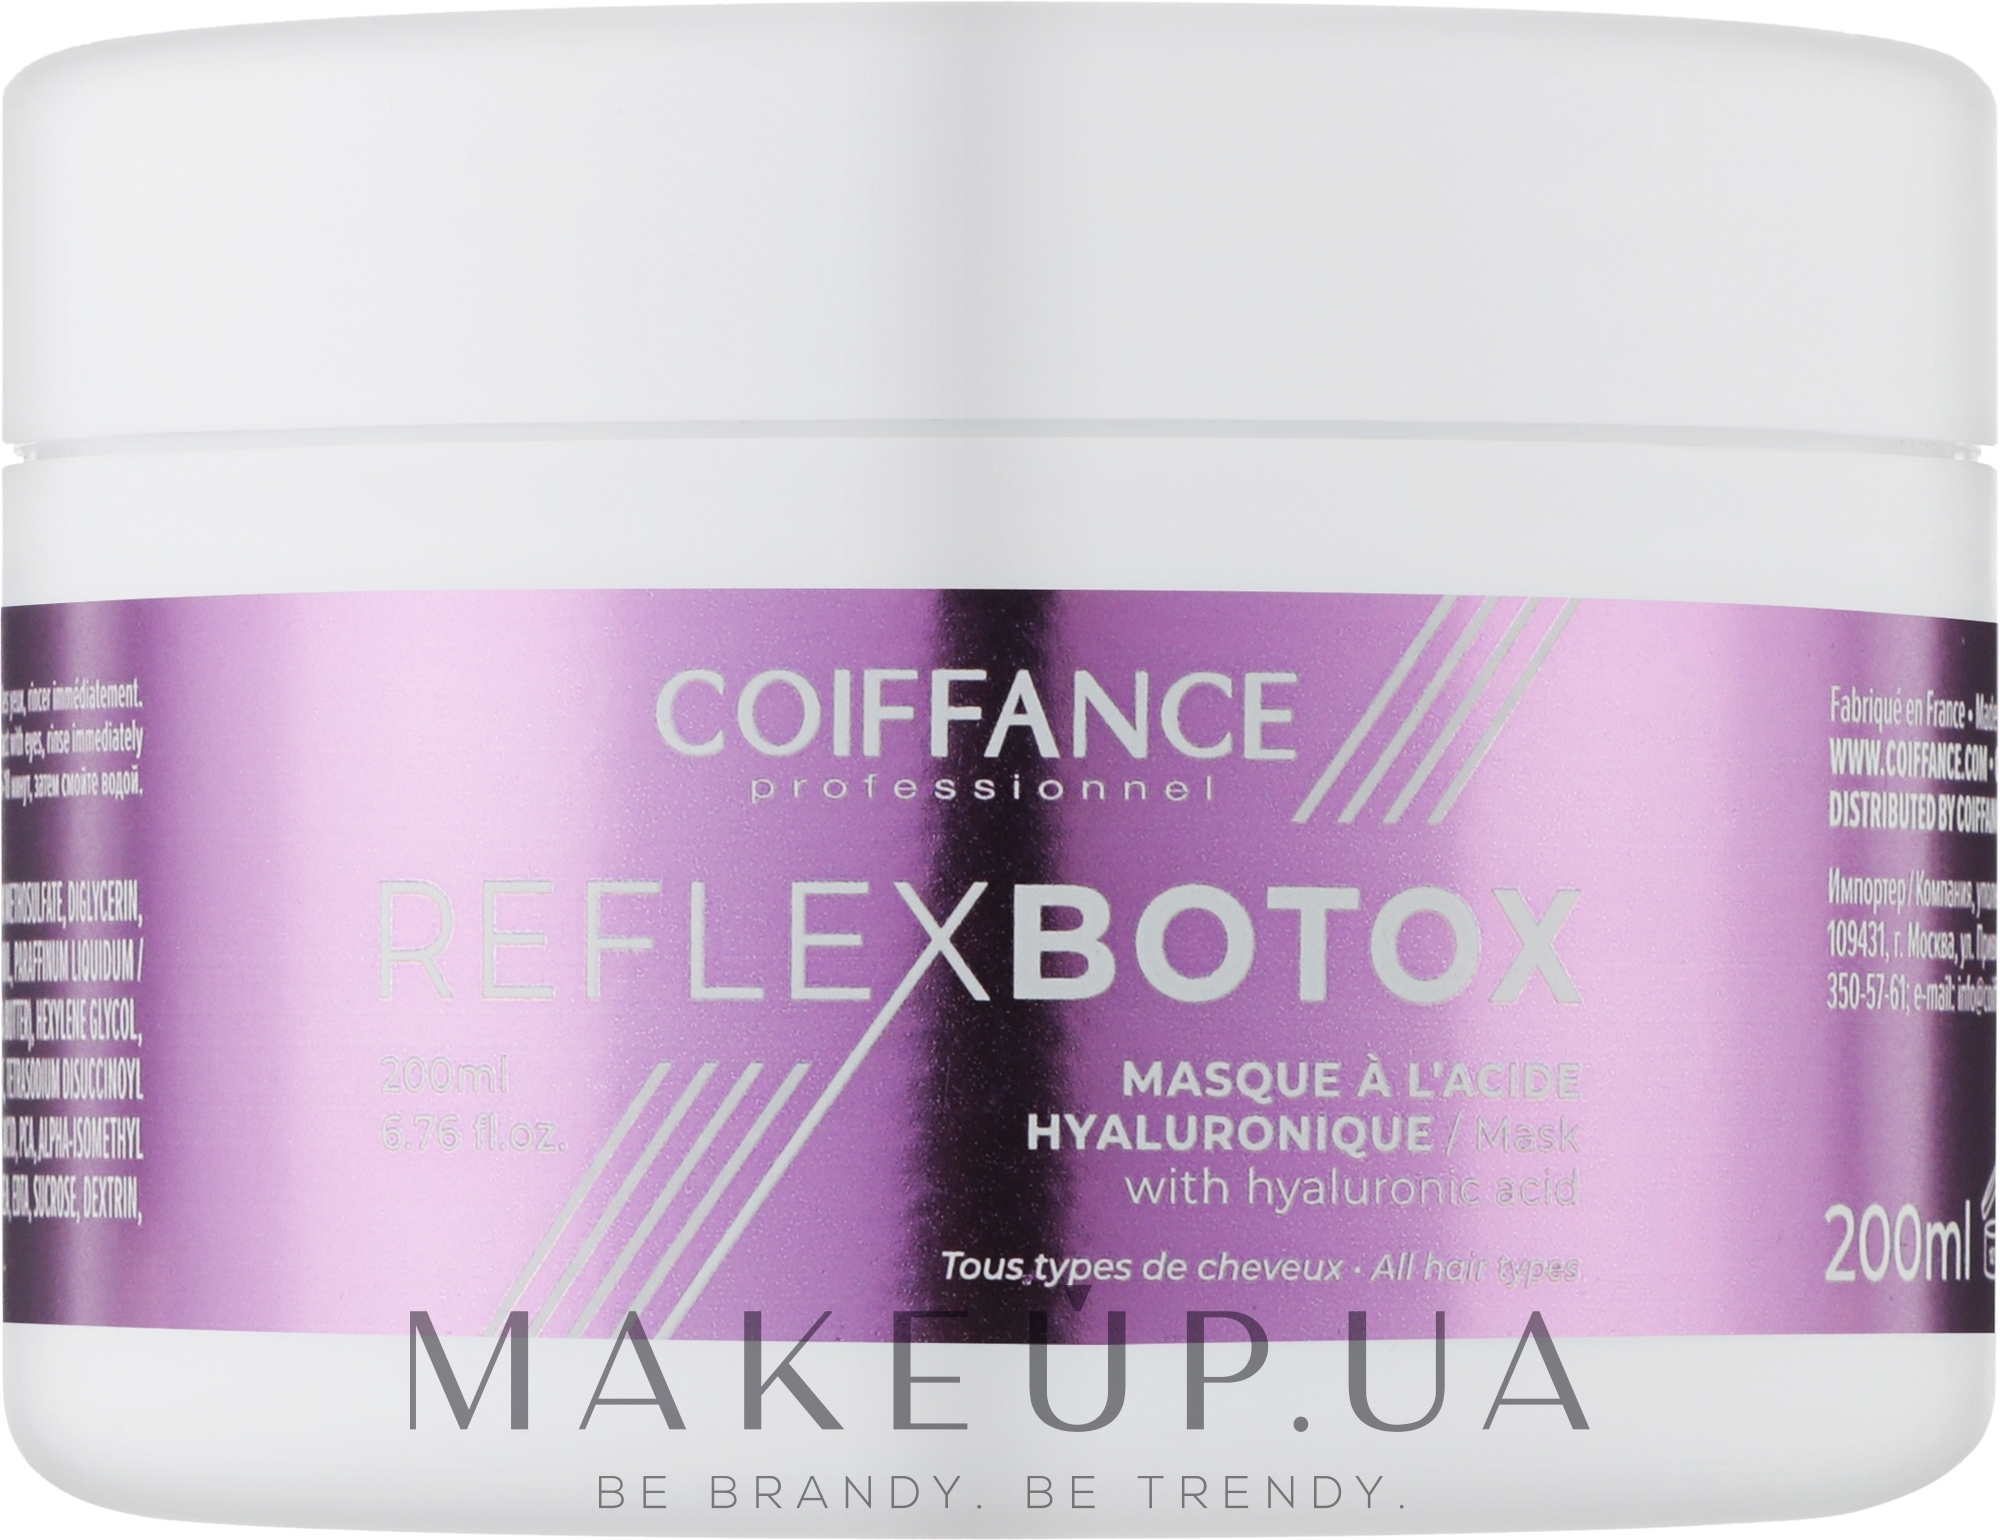 Маска для волос с гиалуроновой кислотой - Coiffance Professionnel Reflexbotox Mask With Hyaluronic Acid — фото 200ml